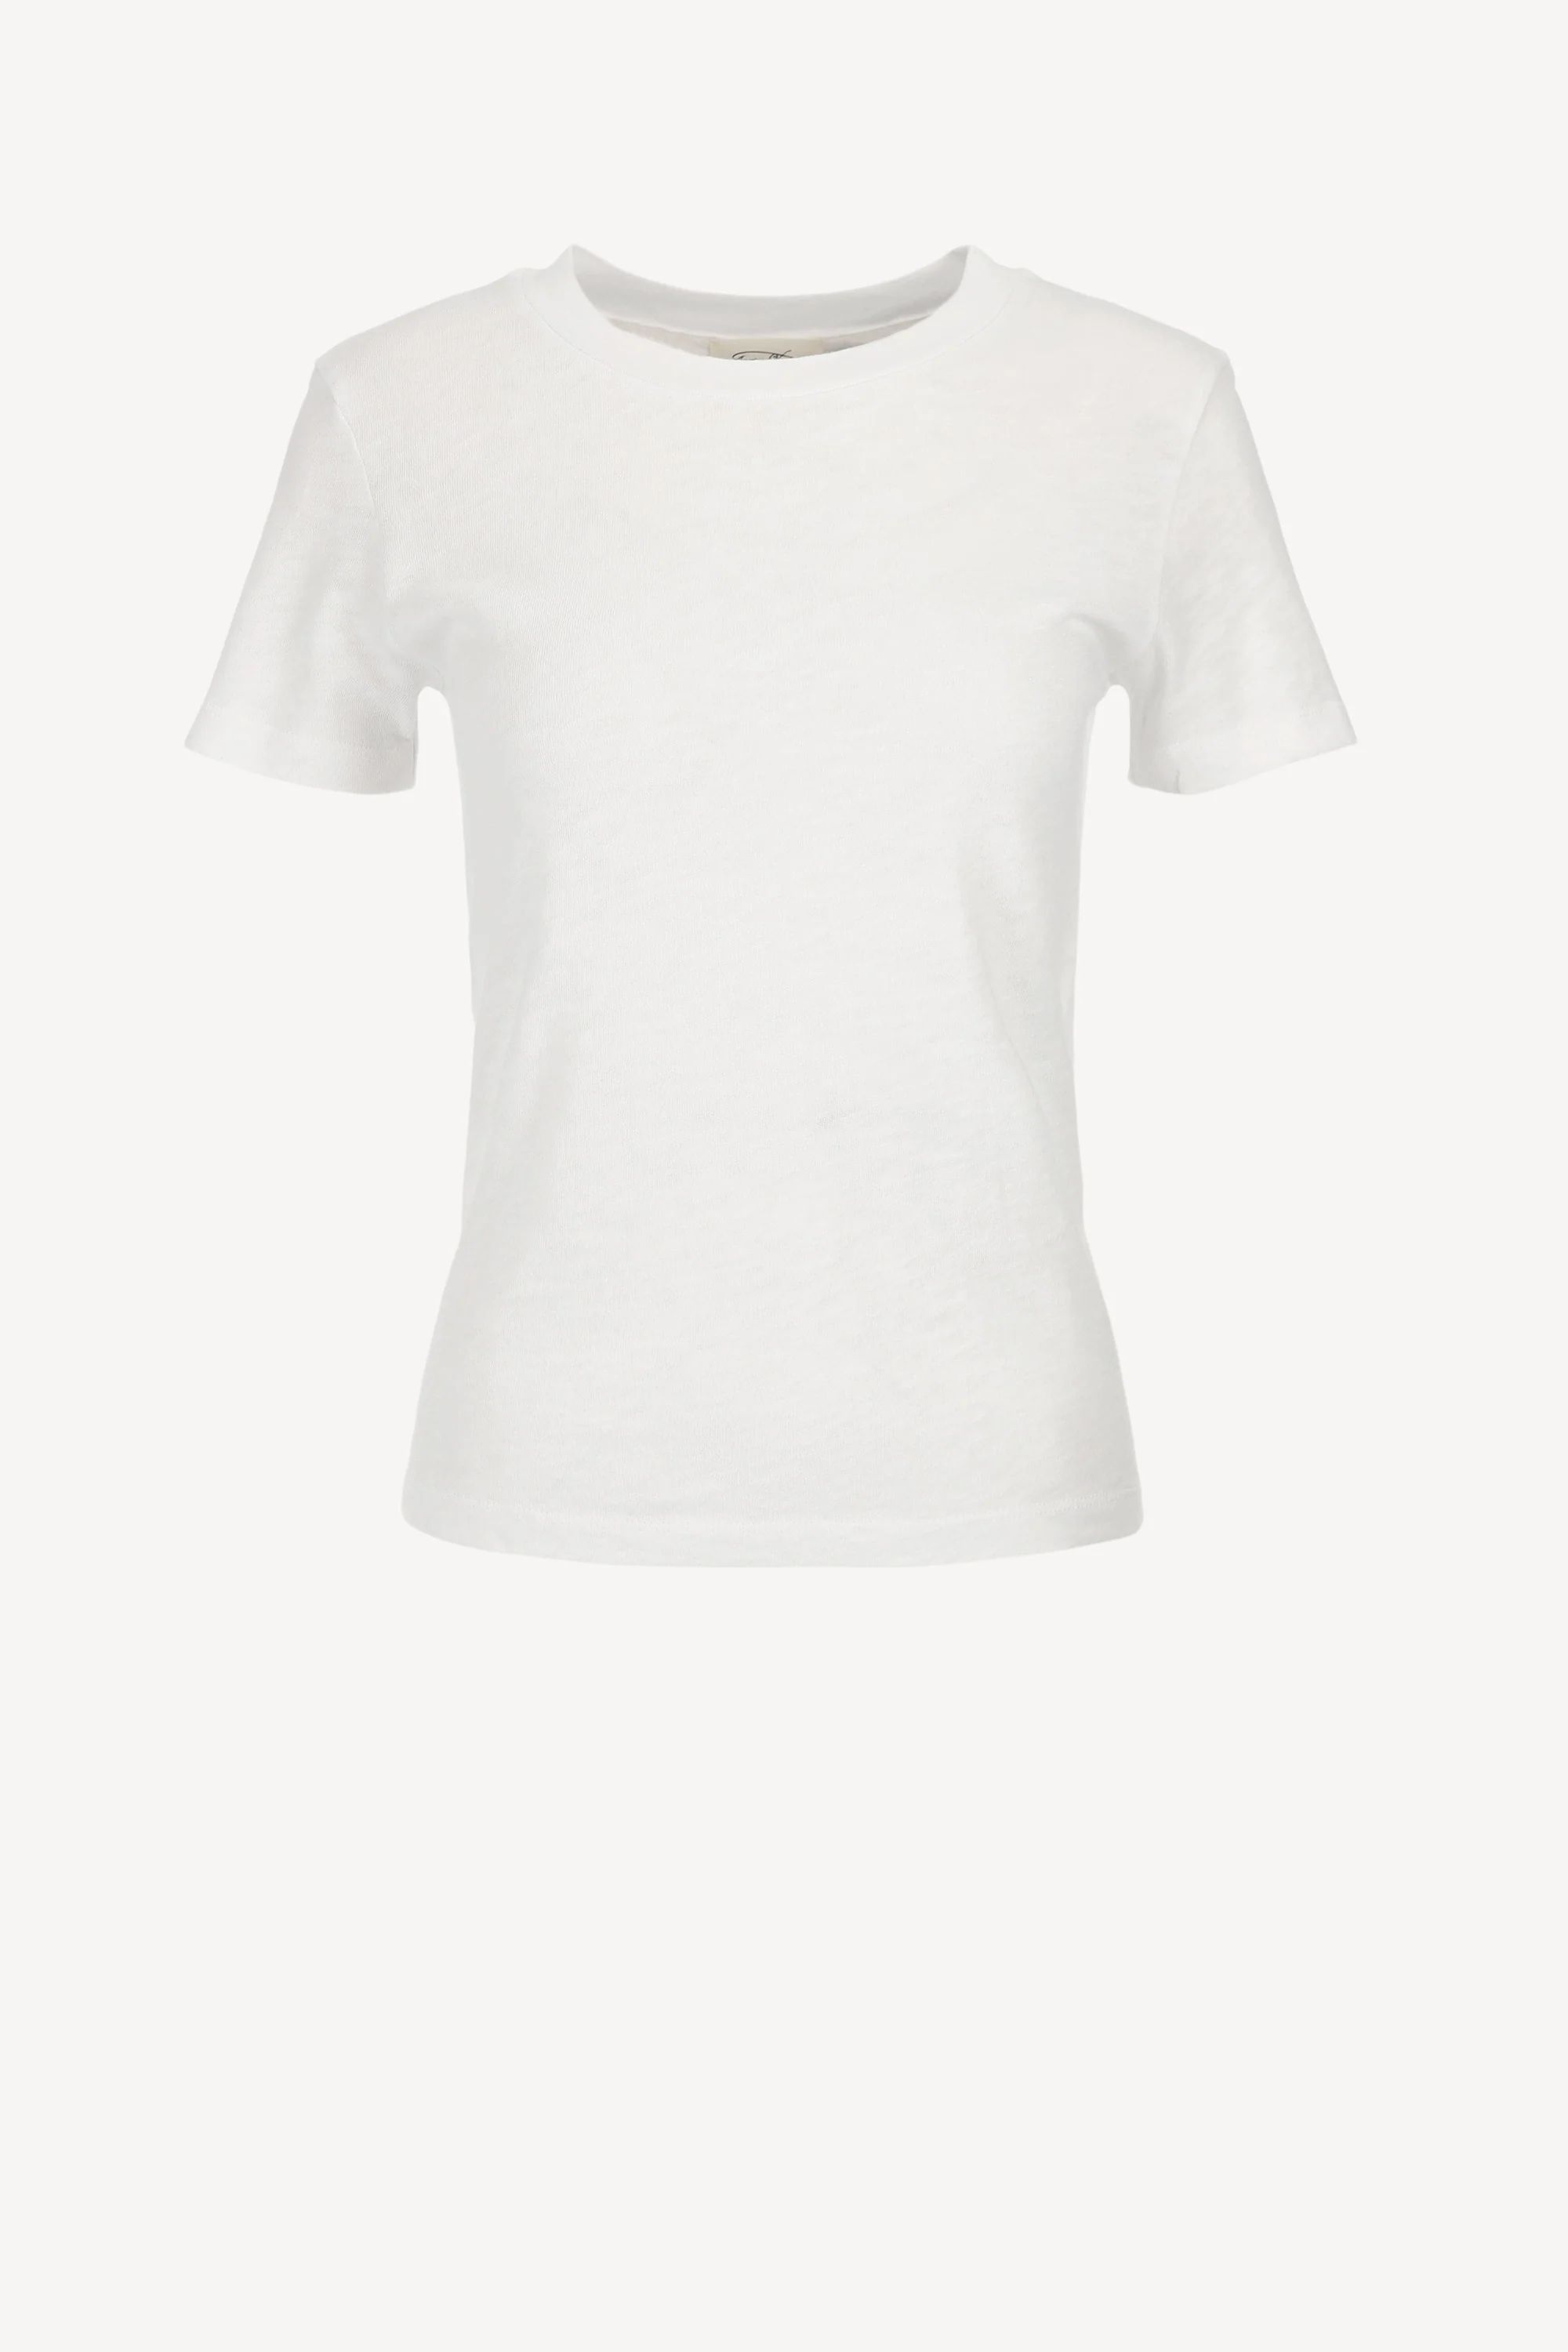 T-Shirt Sonoma in Weiß | ANITA HASS